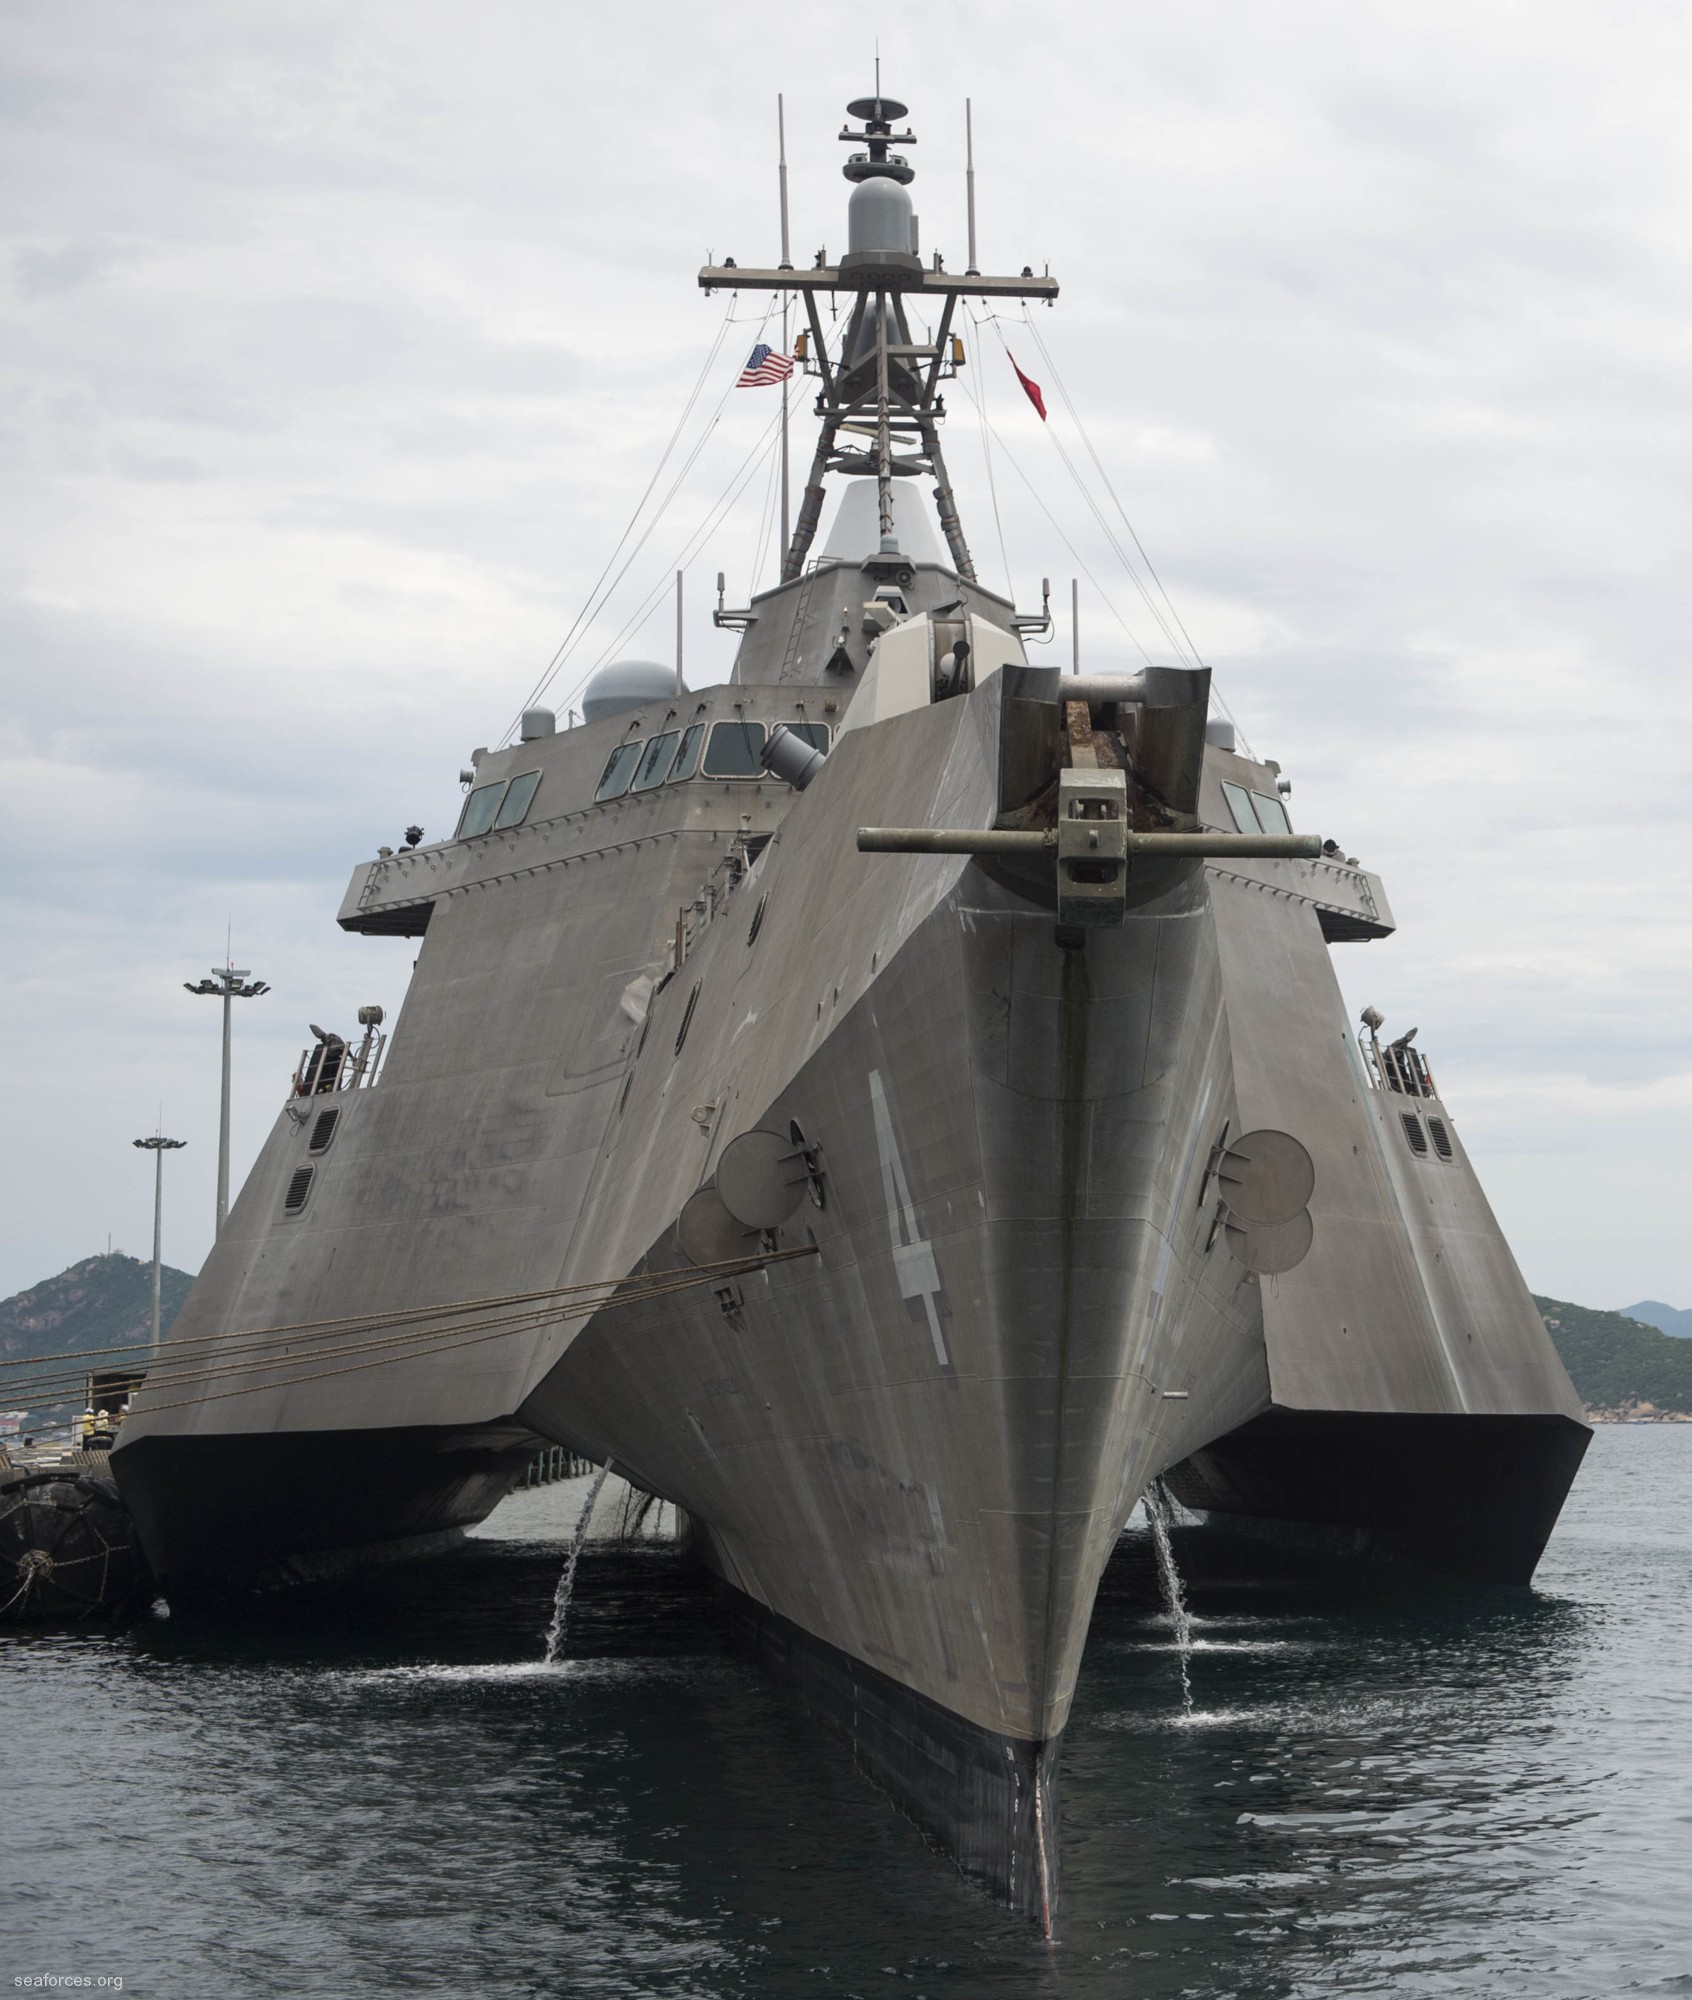 lcs-4 uss coronado independence class littoral combat ship us navy 18a cam ranh bay vietnam